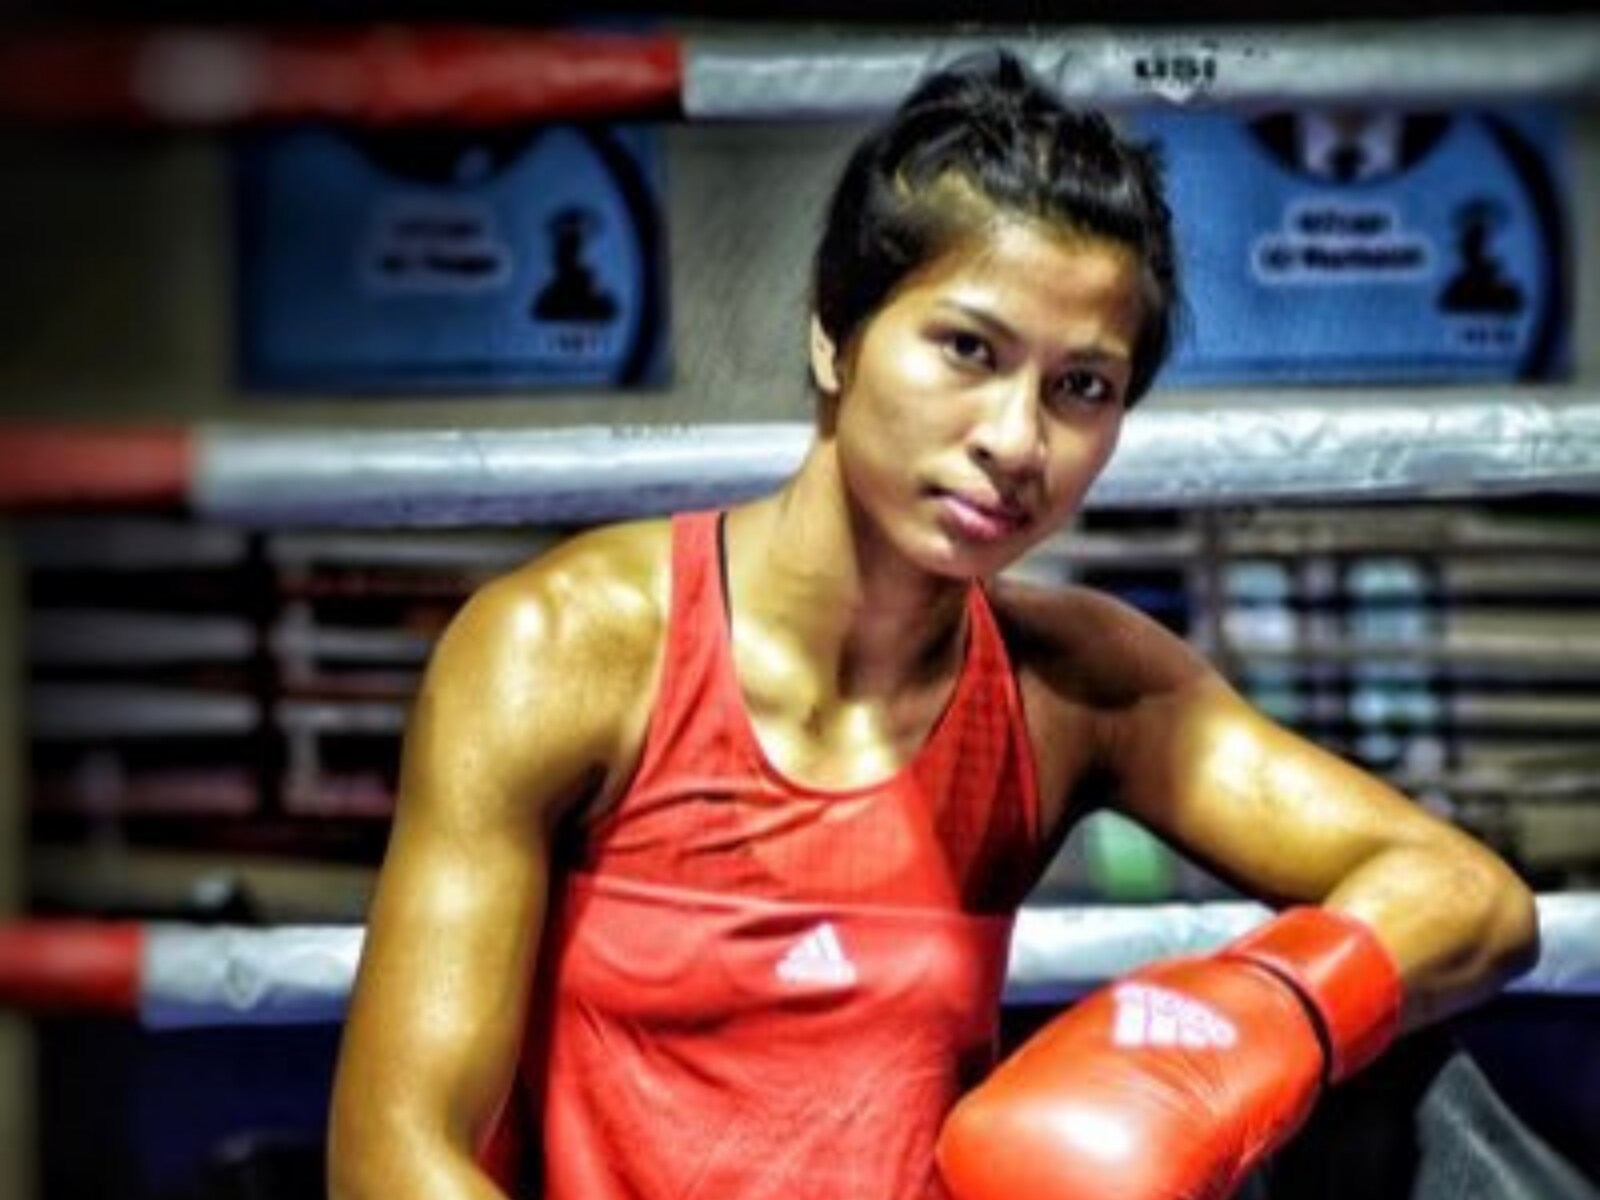 Tokyo 2020: Pooja Rani makes a mark on boxing debut